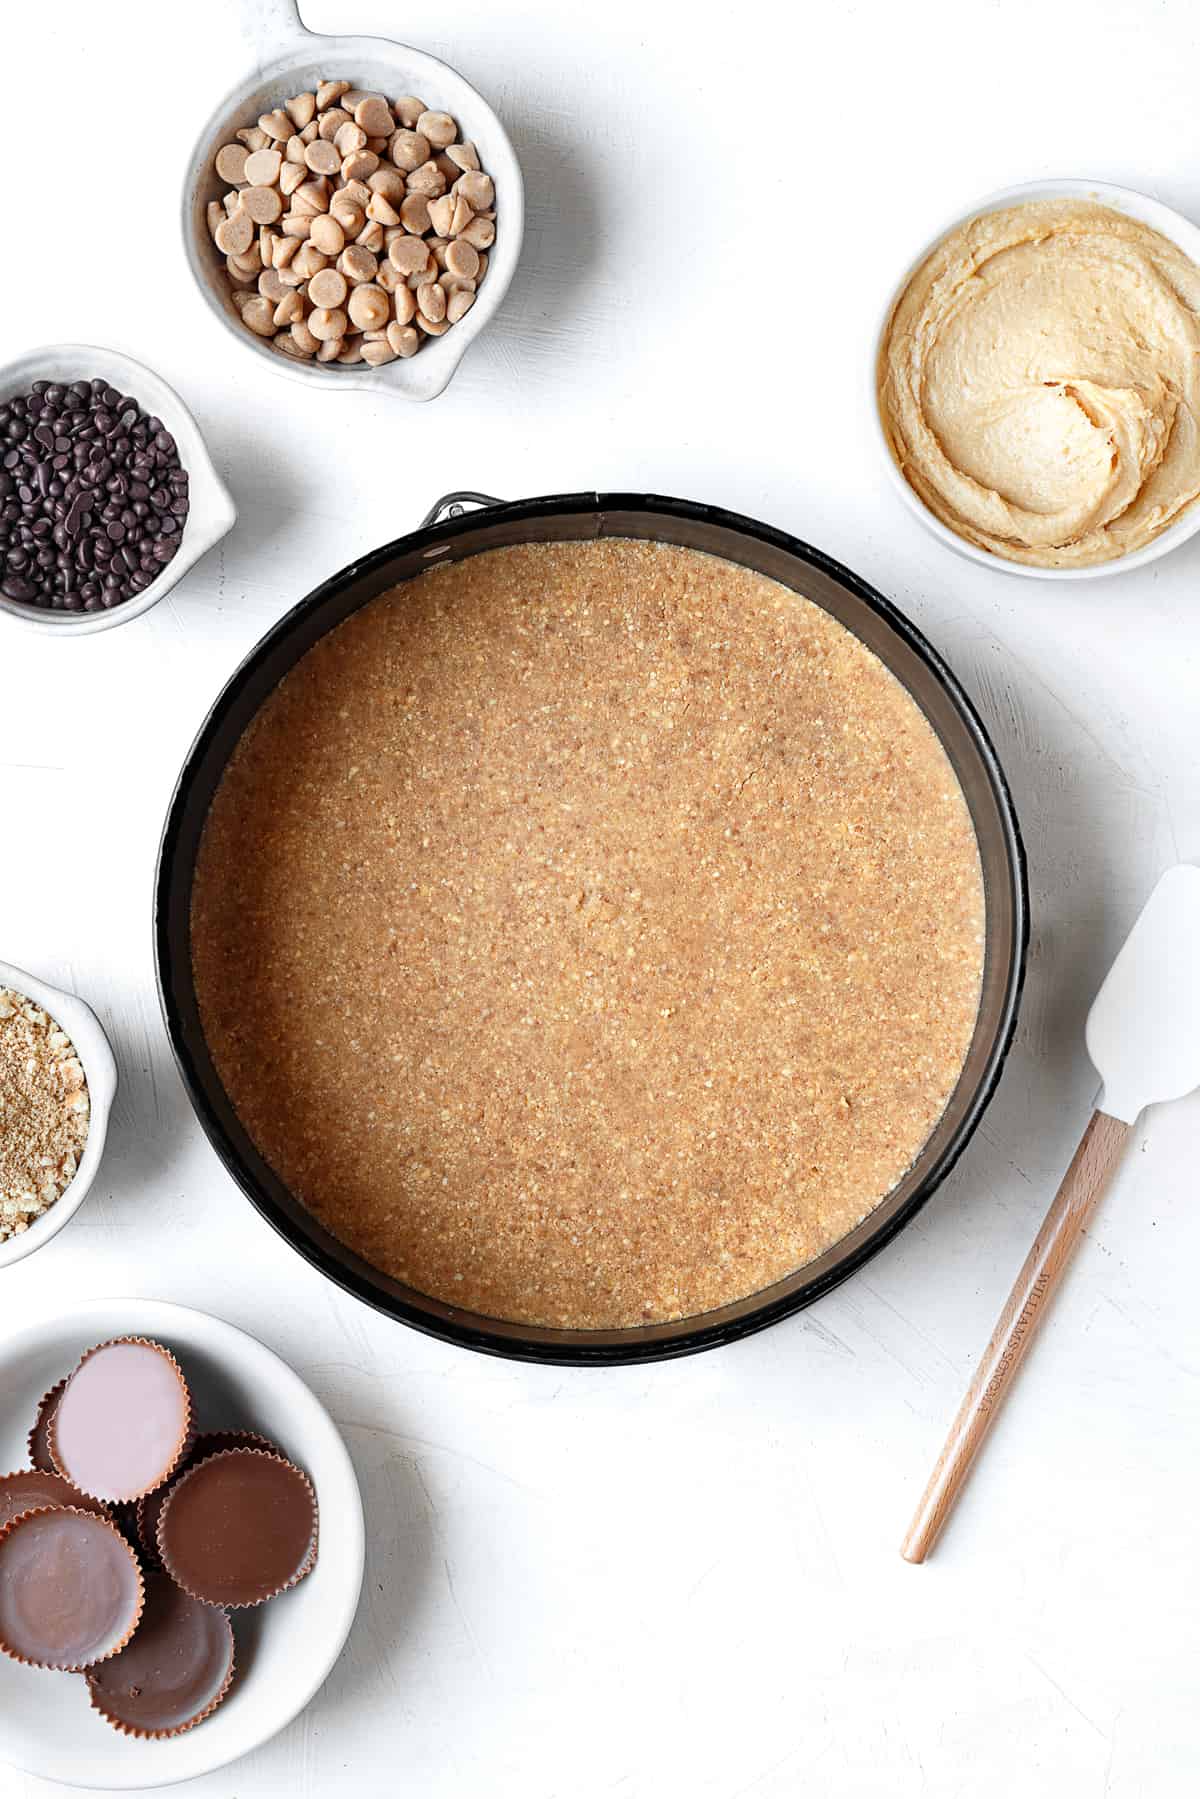 no-bake chocolate peanut butter pie crust in a pie pan.